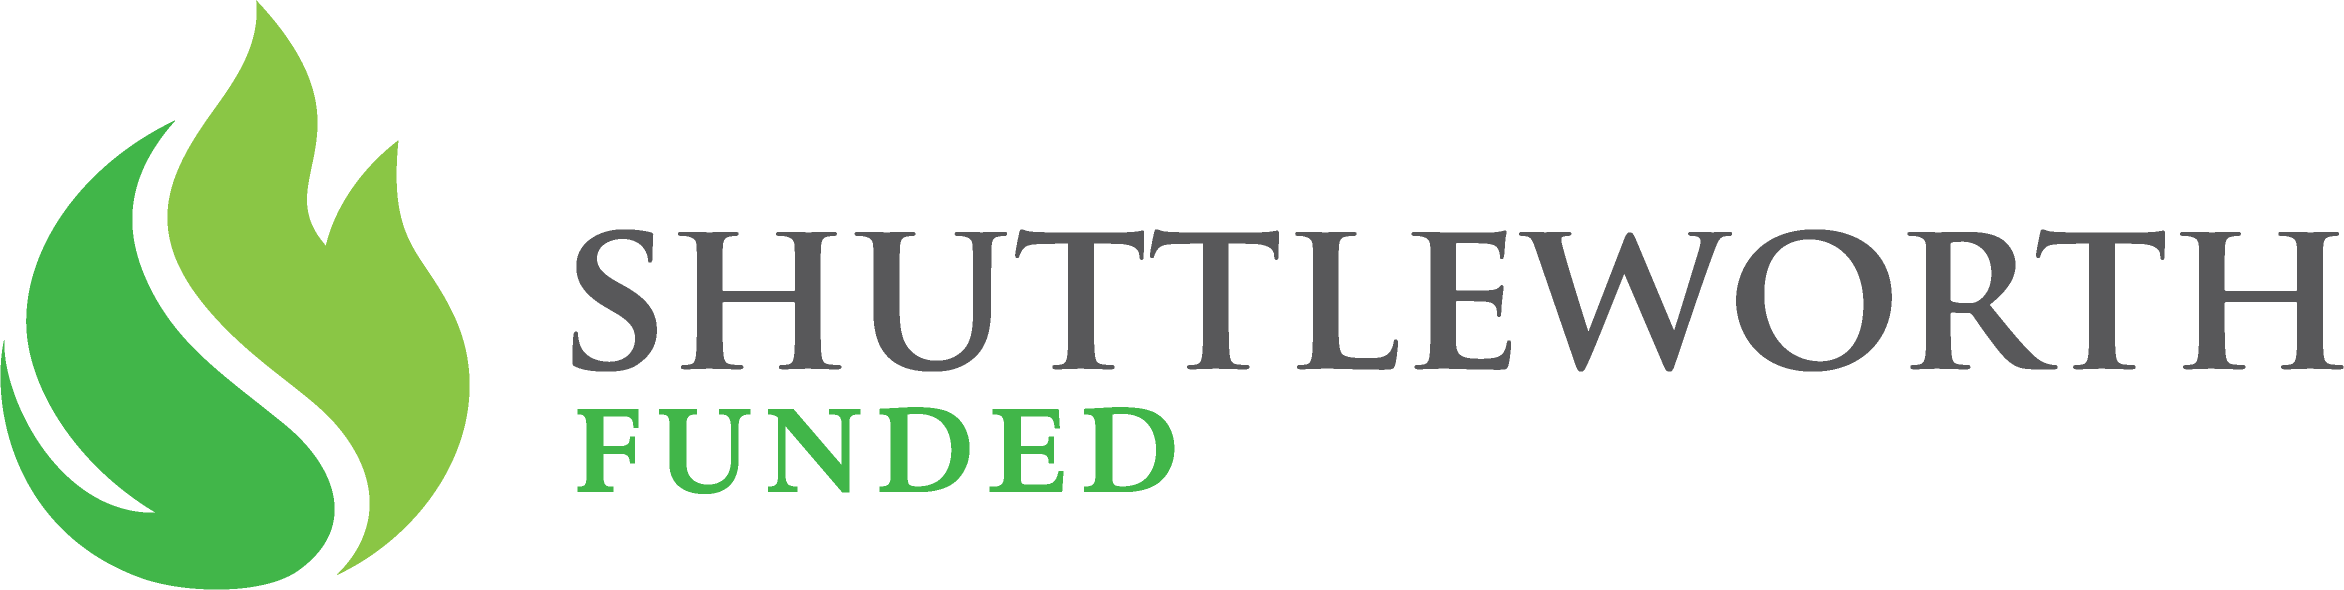 The Shuttleworth Foundation